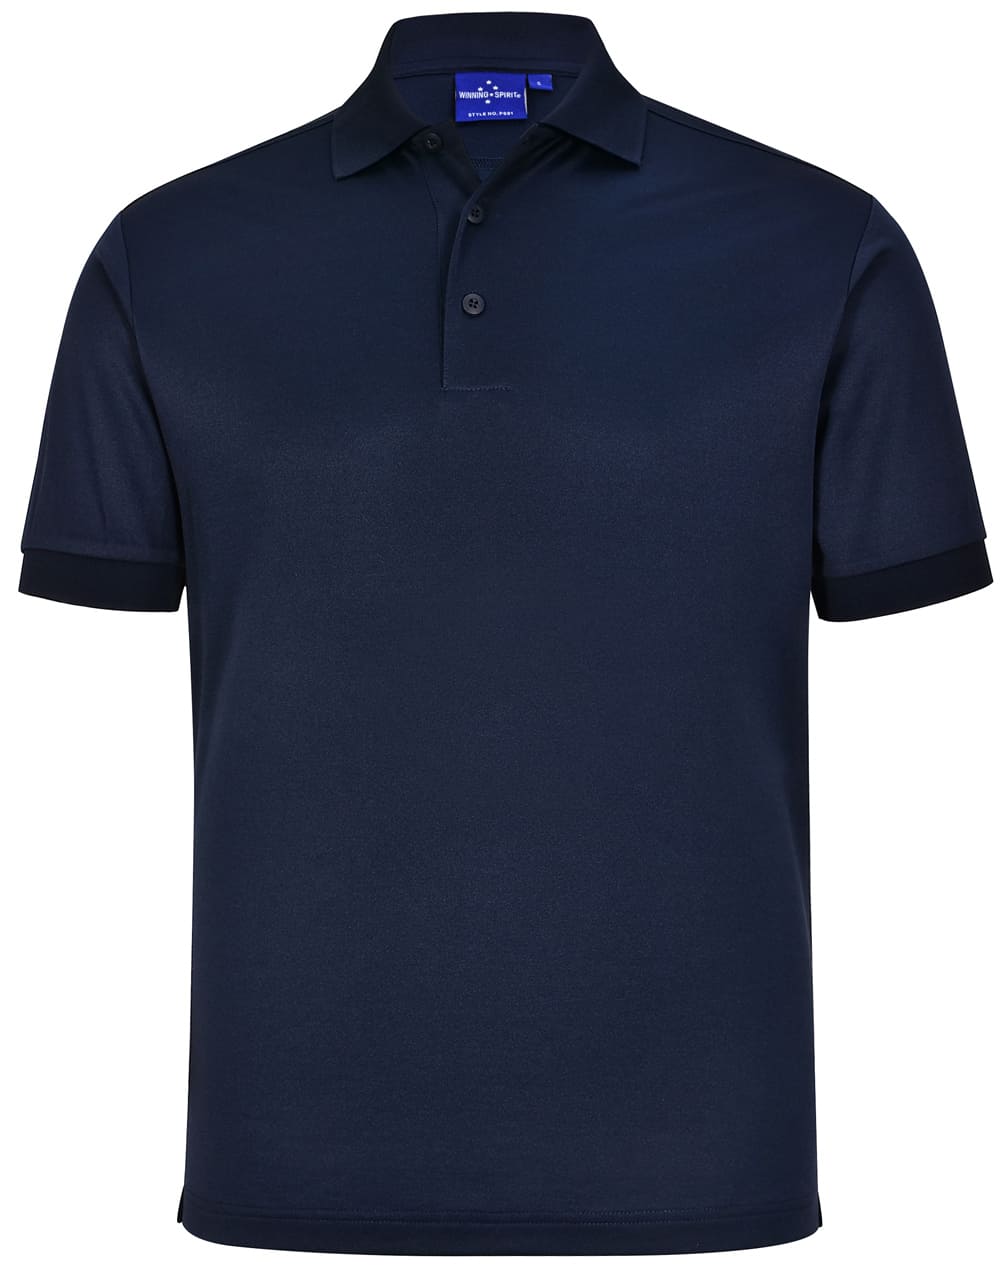 Custom Mens (Heavy Cloud) Corporate Branded Polo Shirts Online Perth Australia